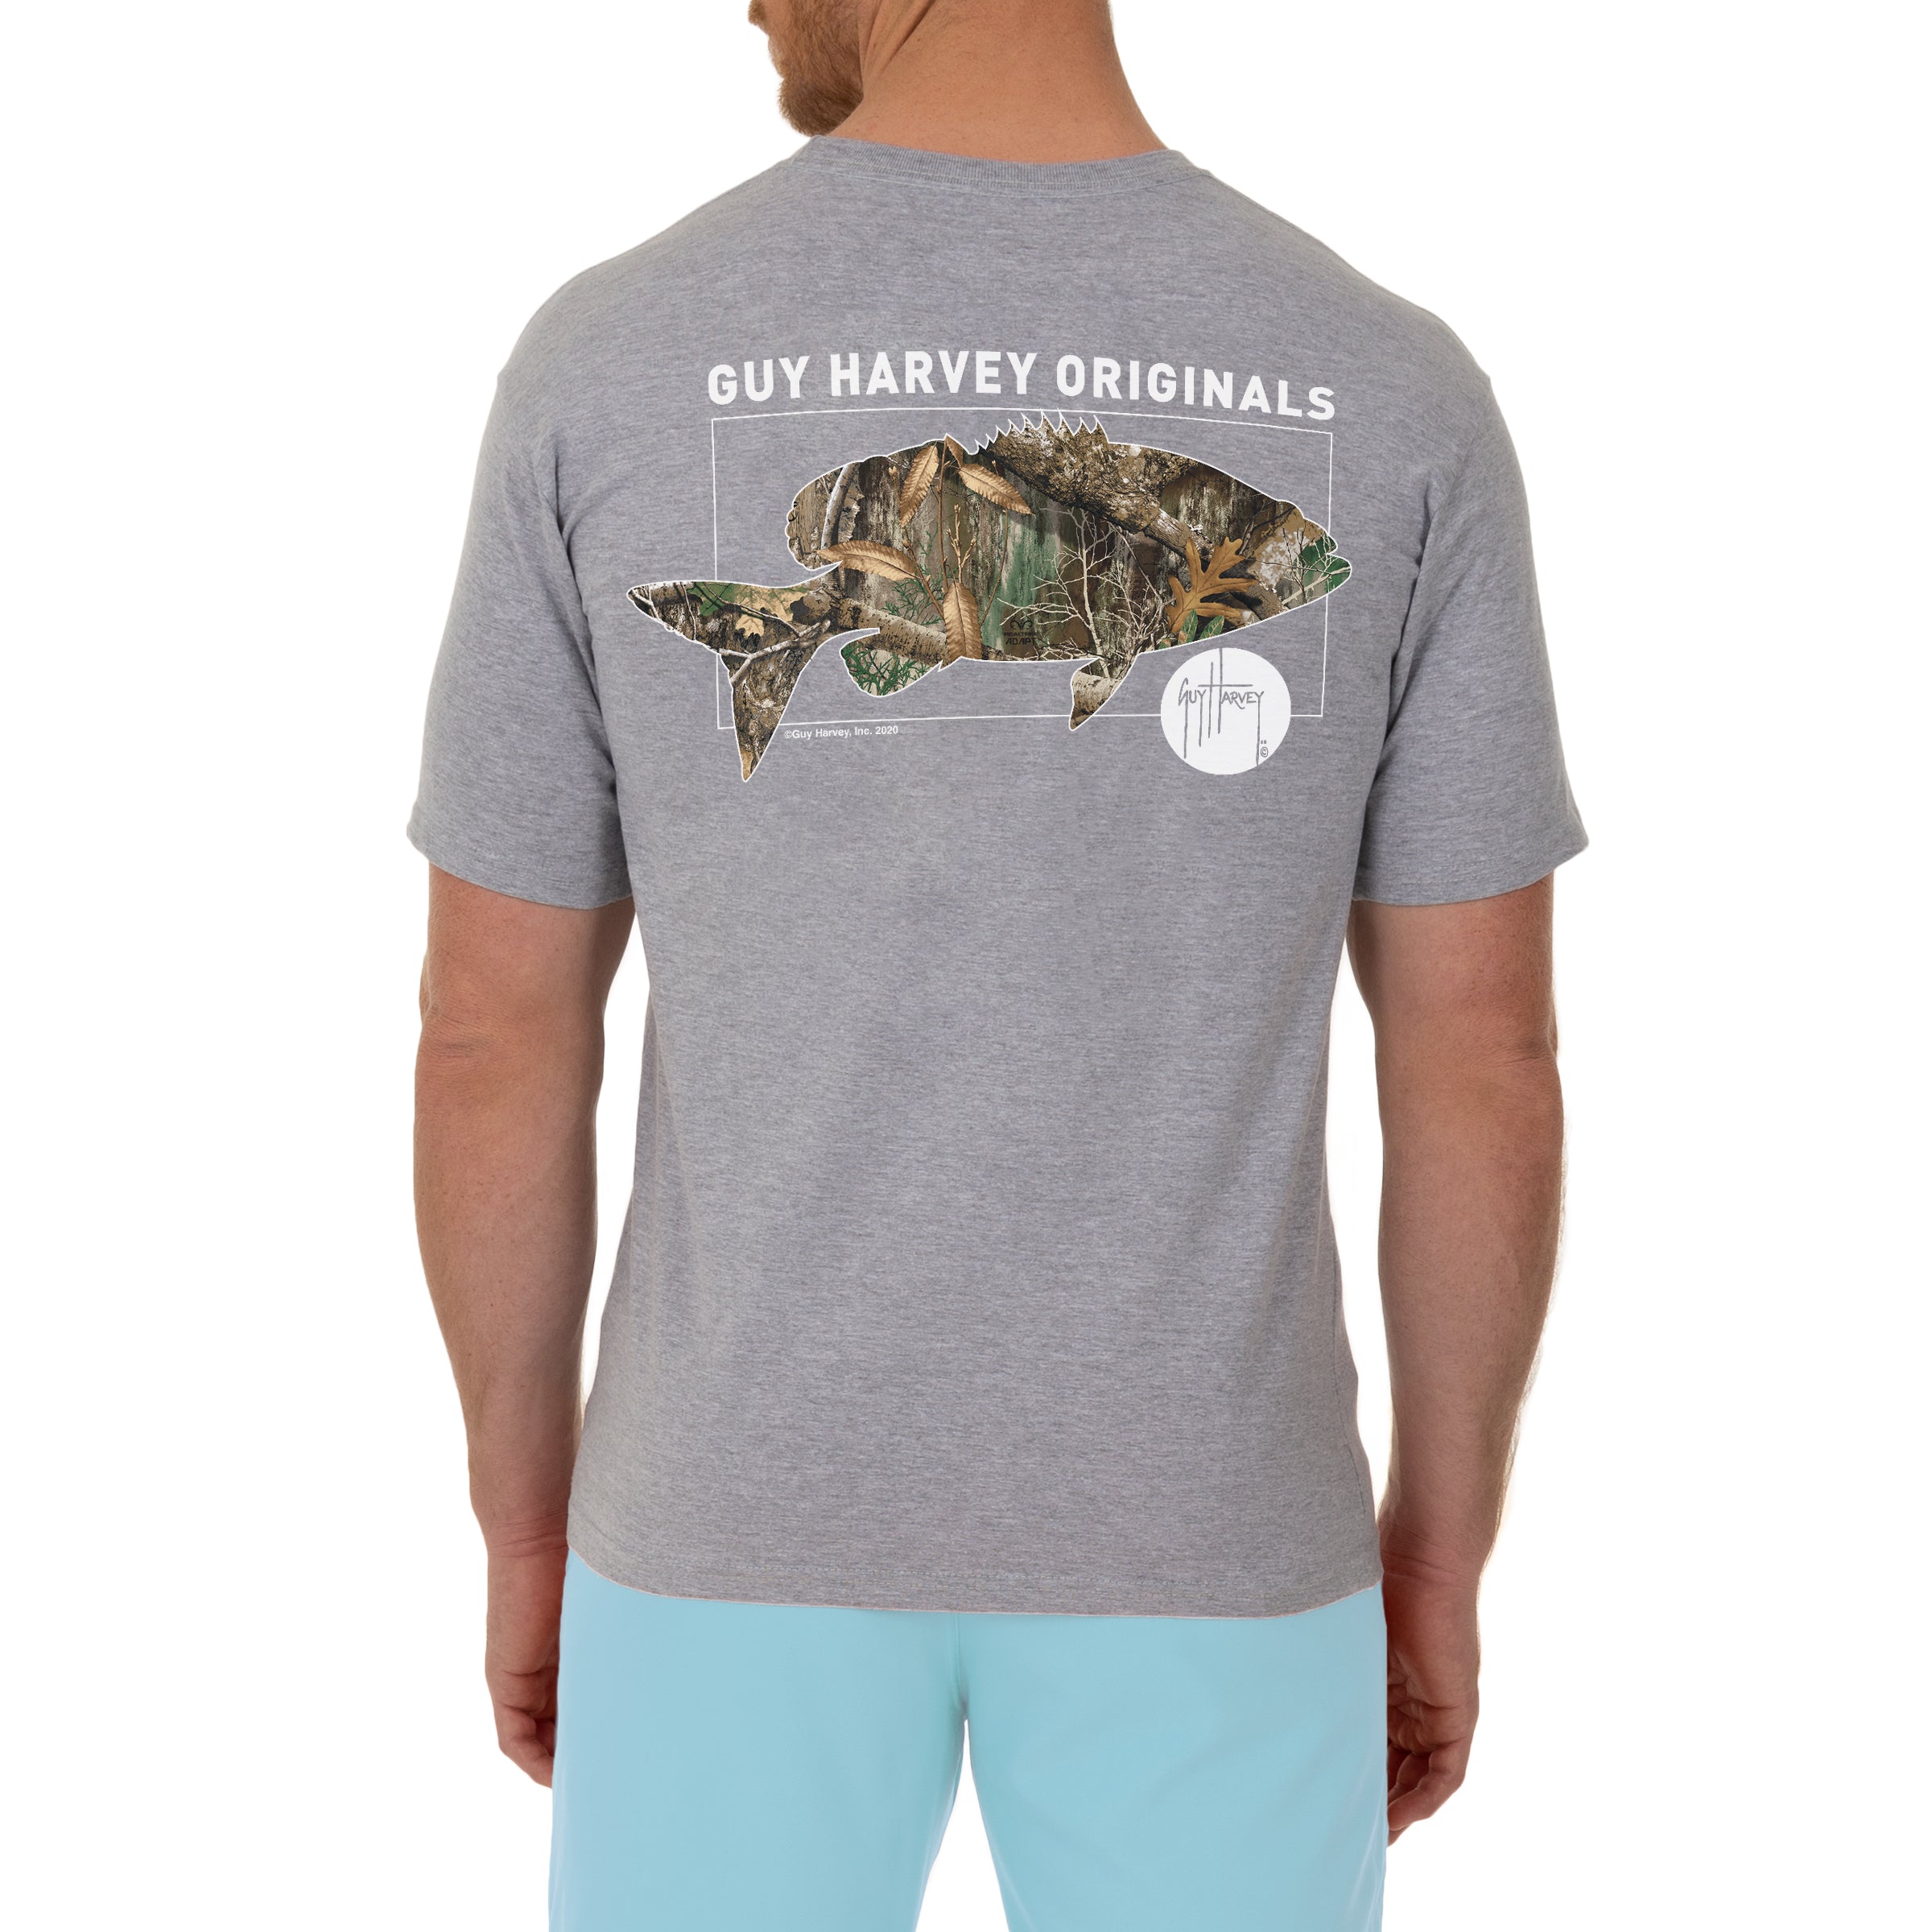 YETI Fishing Bass Short Sleeve T-Shirt